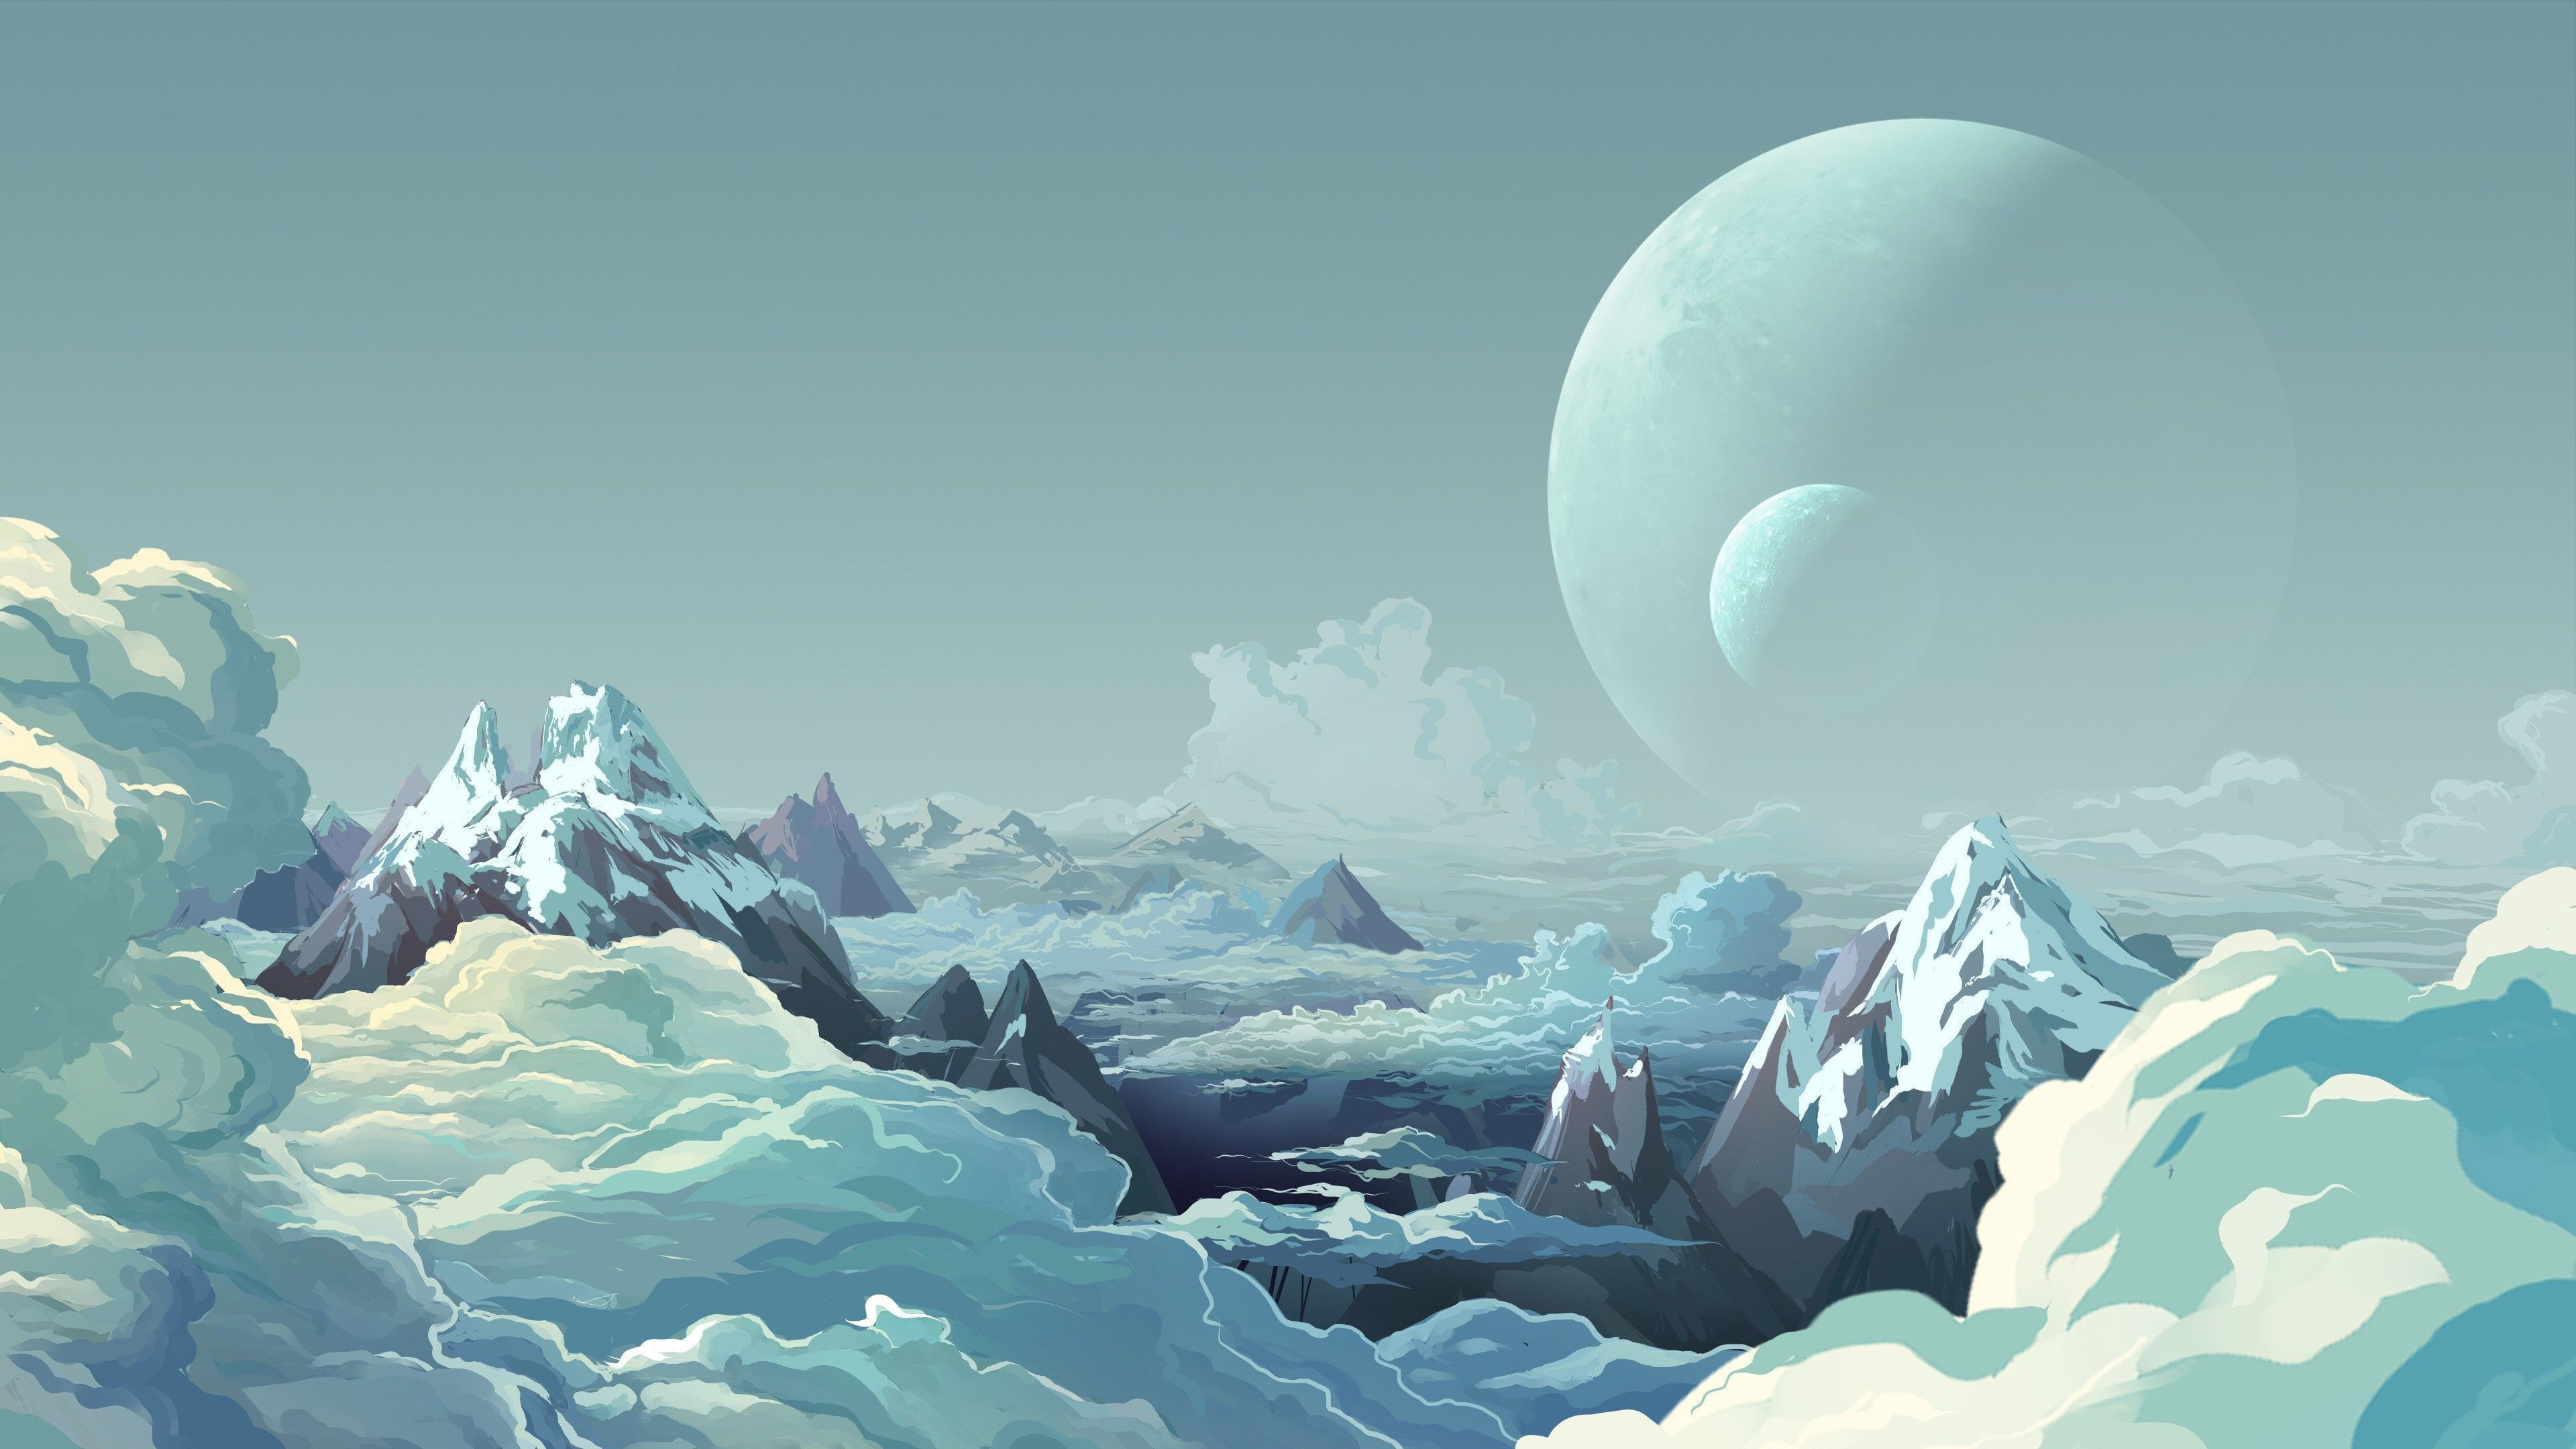 Fondos de pantalla Ilustración montañas nevadas nubes